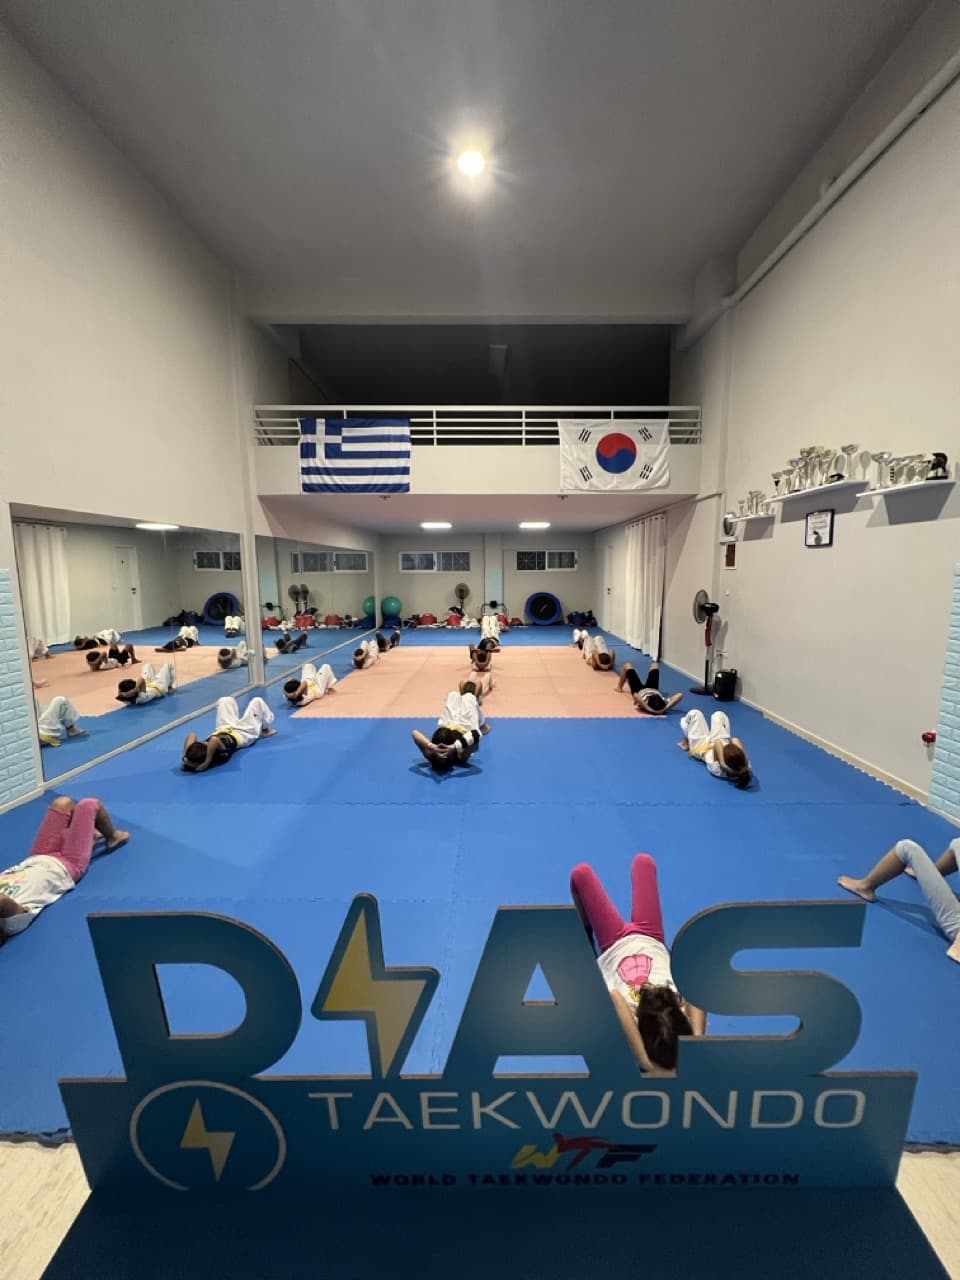 dias-kalamatas-taekwondo-sportshunter8